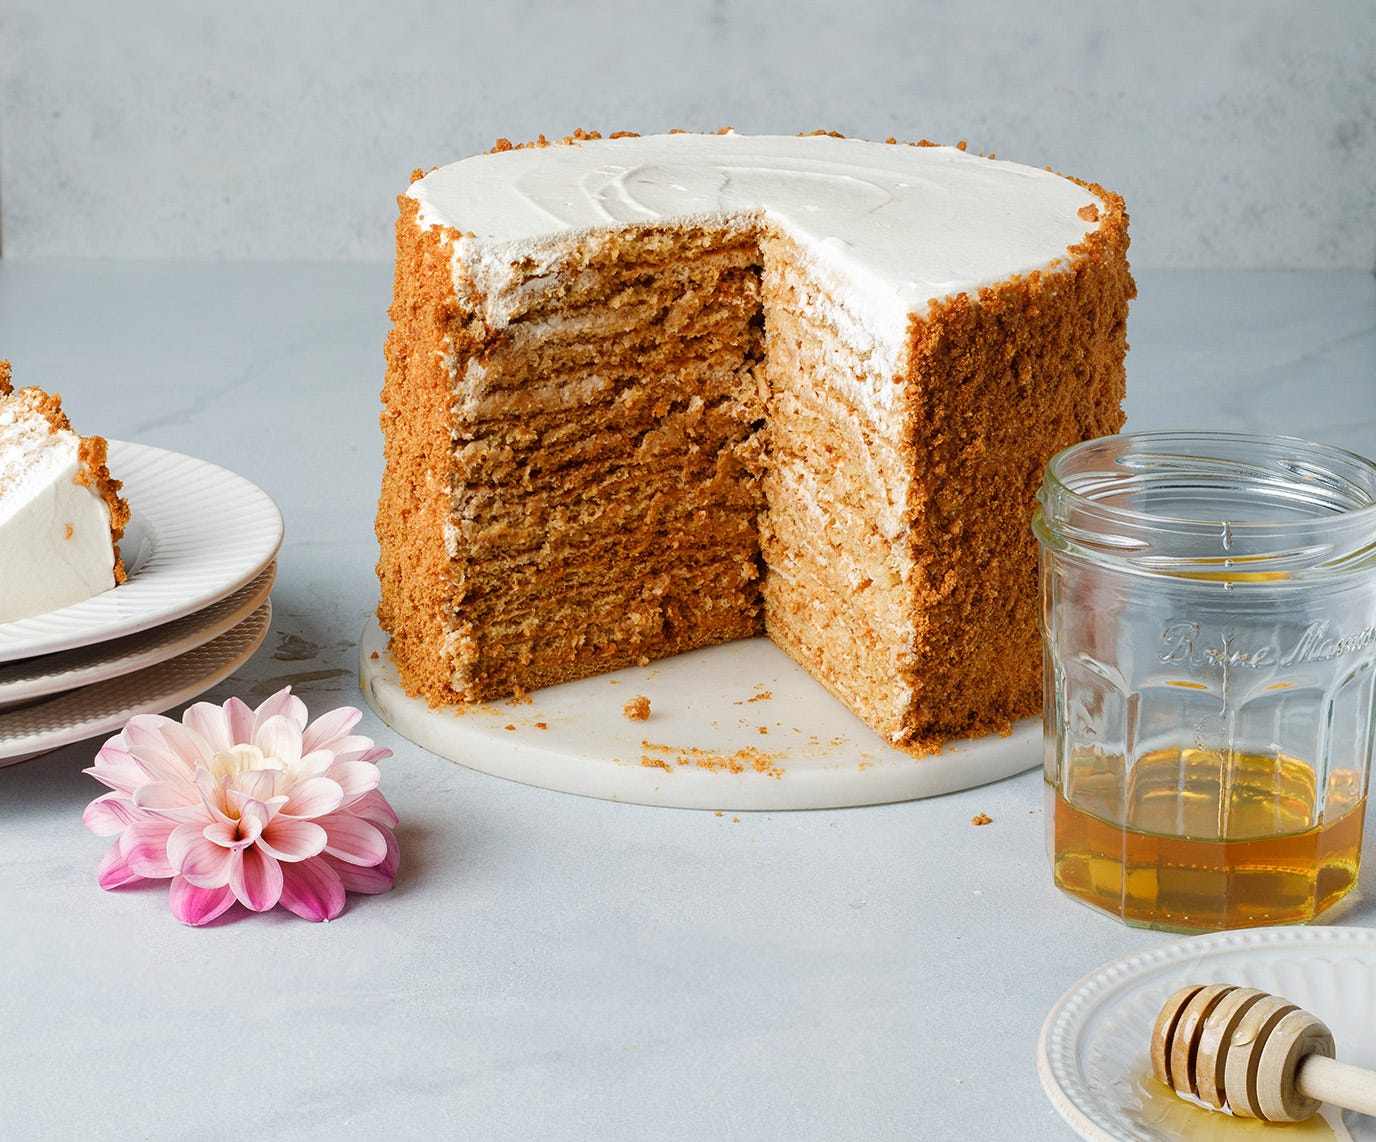 Medovik Russian Honey Cake Recipe and Photos | POPSUGAR Food-mncb.edu.vn